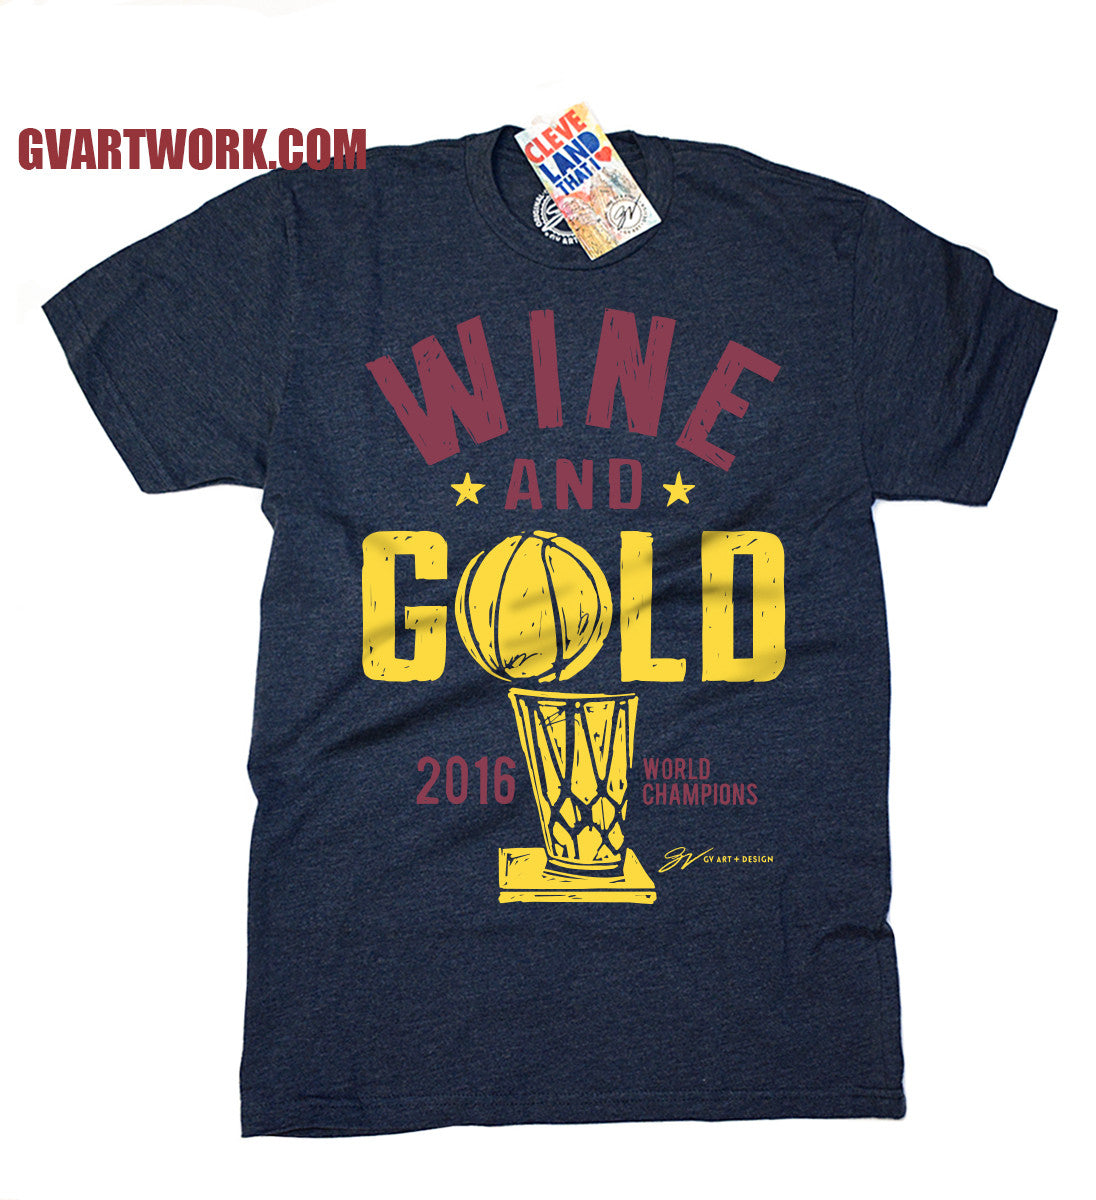 Wine and GOLD! 2016 World Champions T shirt